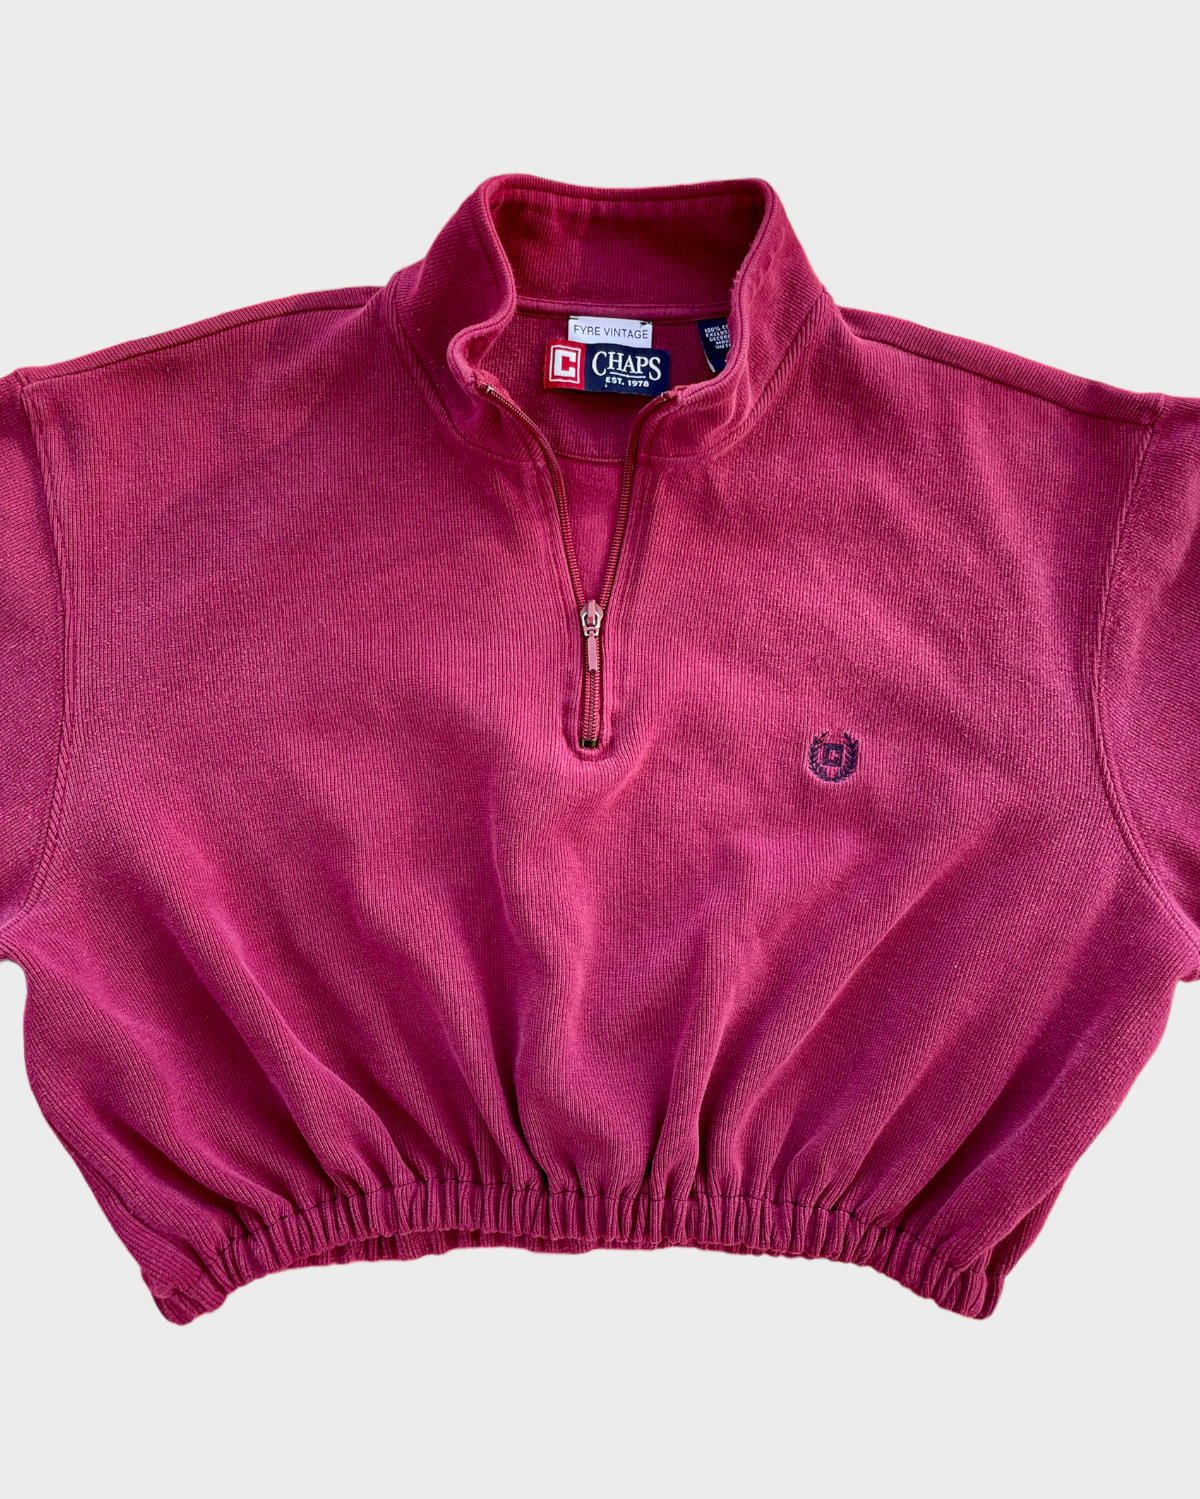 Reworked Chaps Burgundy Crop Pullover Sweater (M/L)